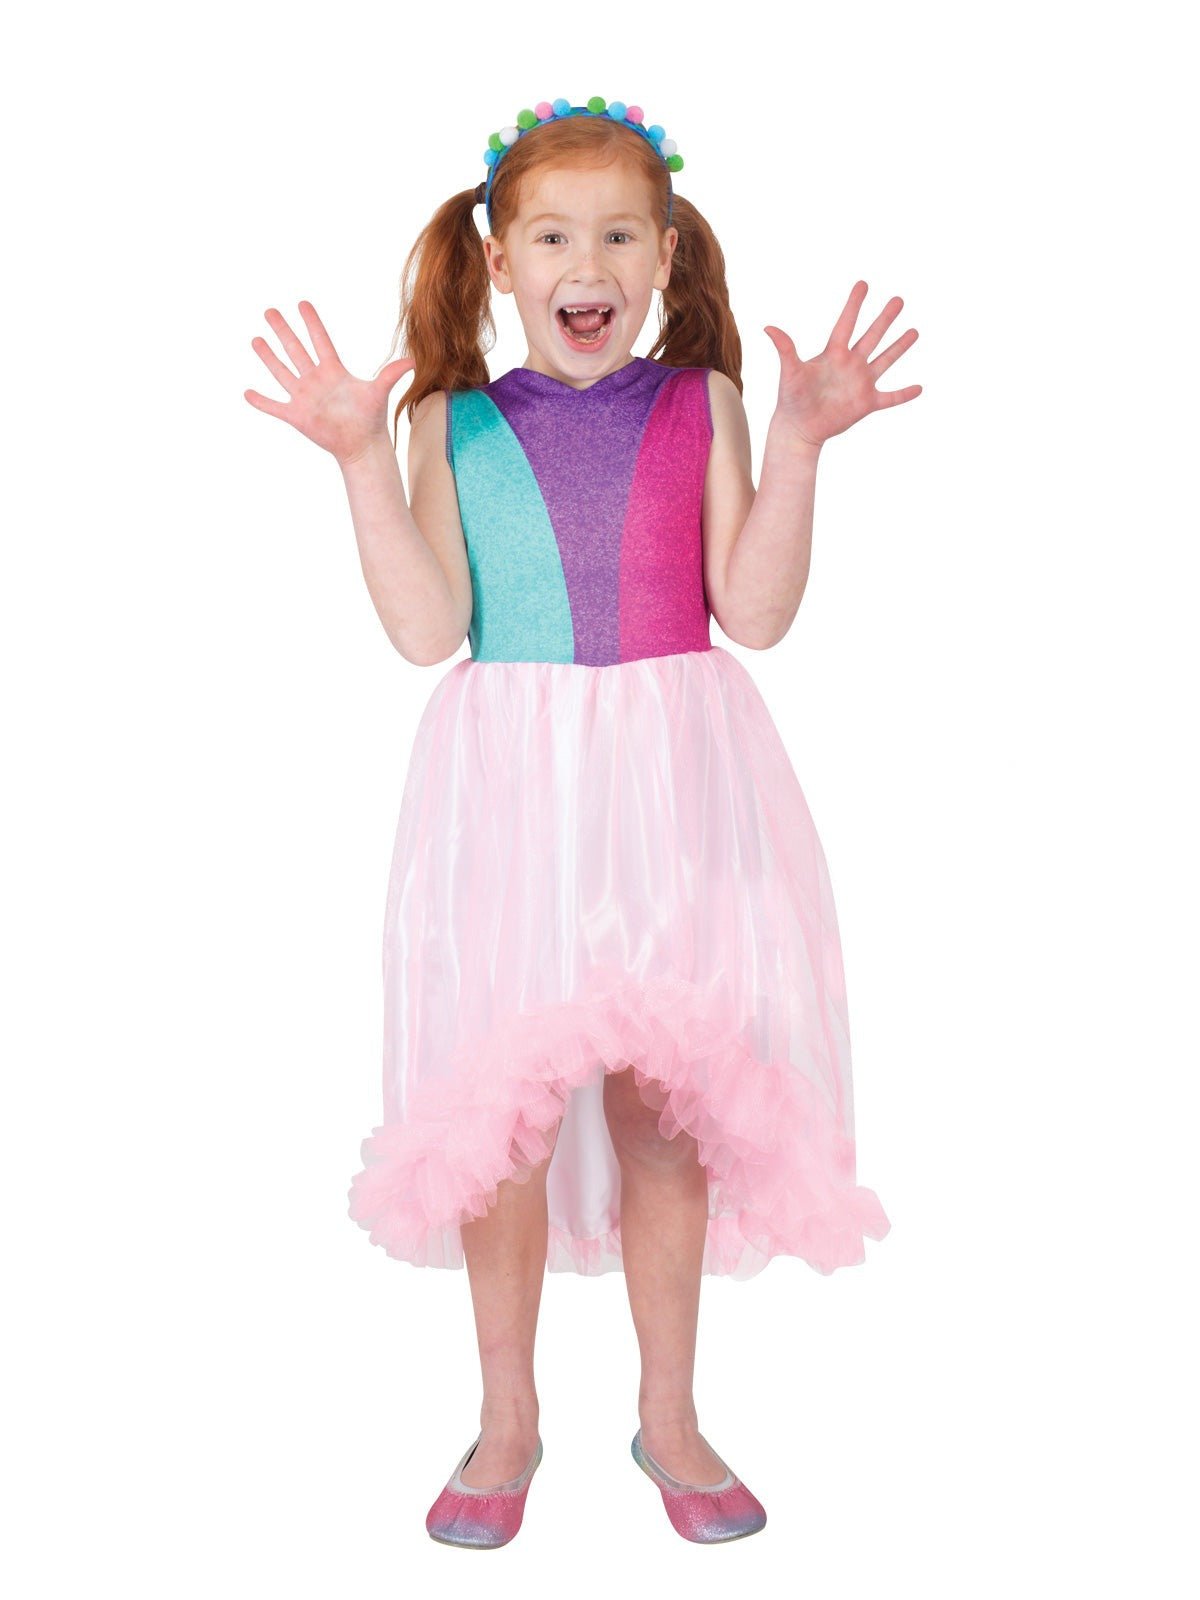 Poppy Bridesmaid Trolls 3 Costume - Size 4-6 Yrs